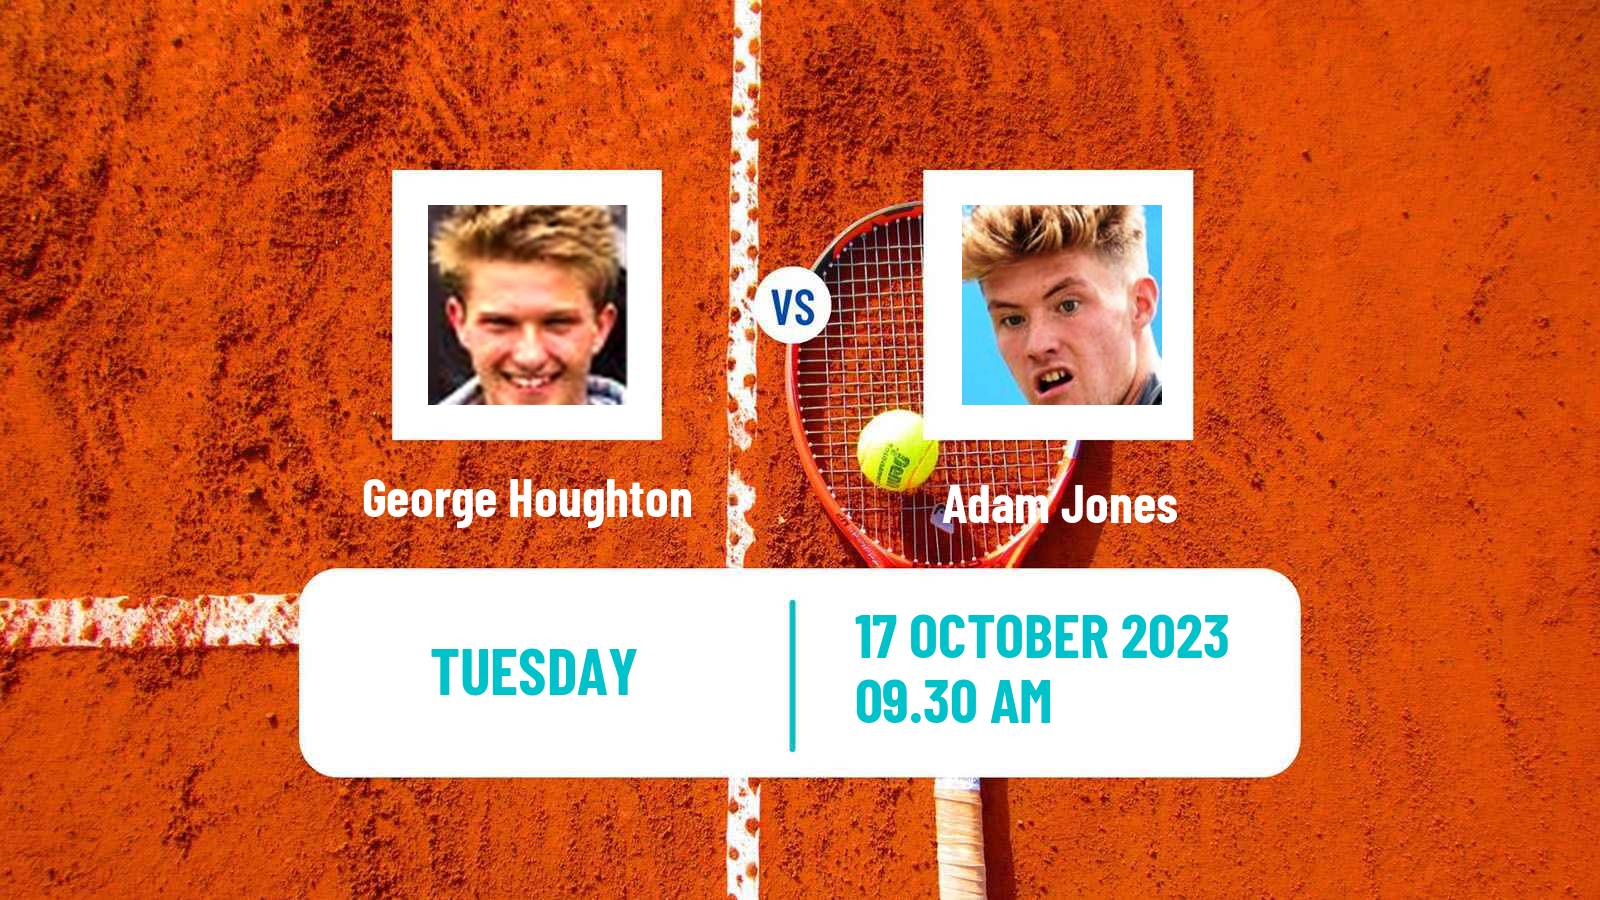 Tennis ITF M25 Edgbaston Men George Houghton - Adam Jones